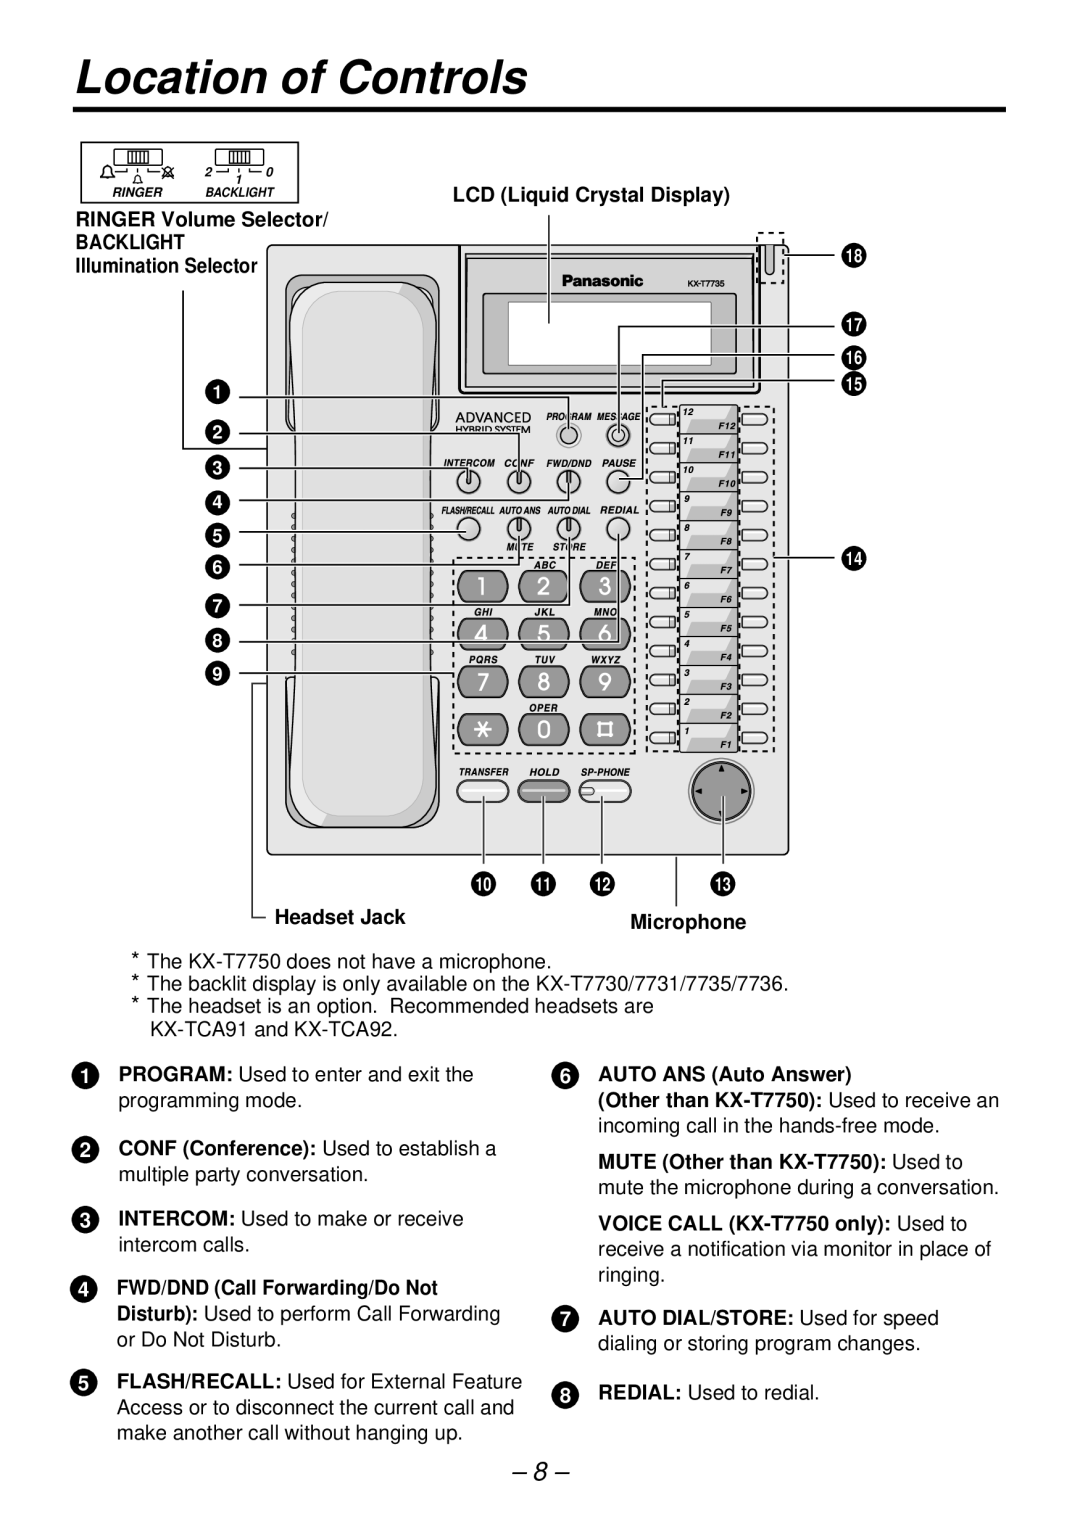 Panasonic KX-TA824 manual Location of Controls, Microphone 